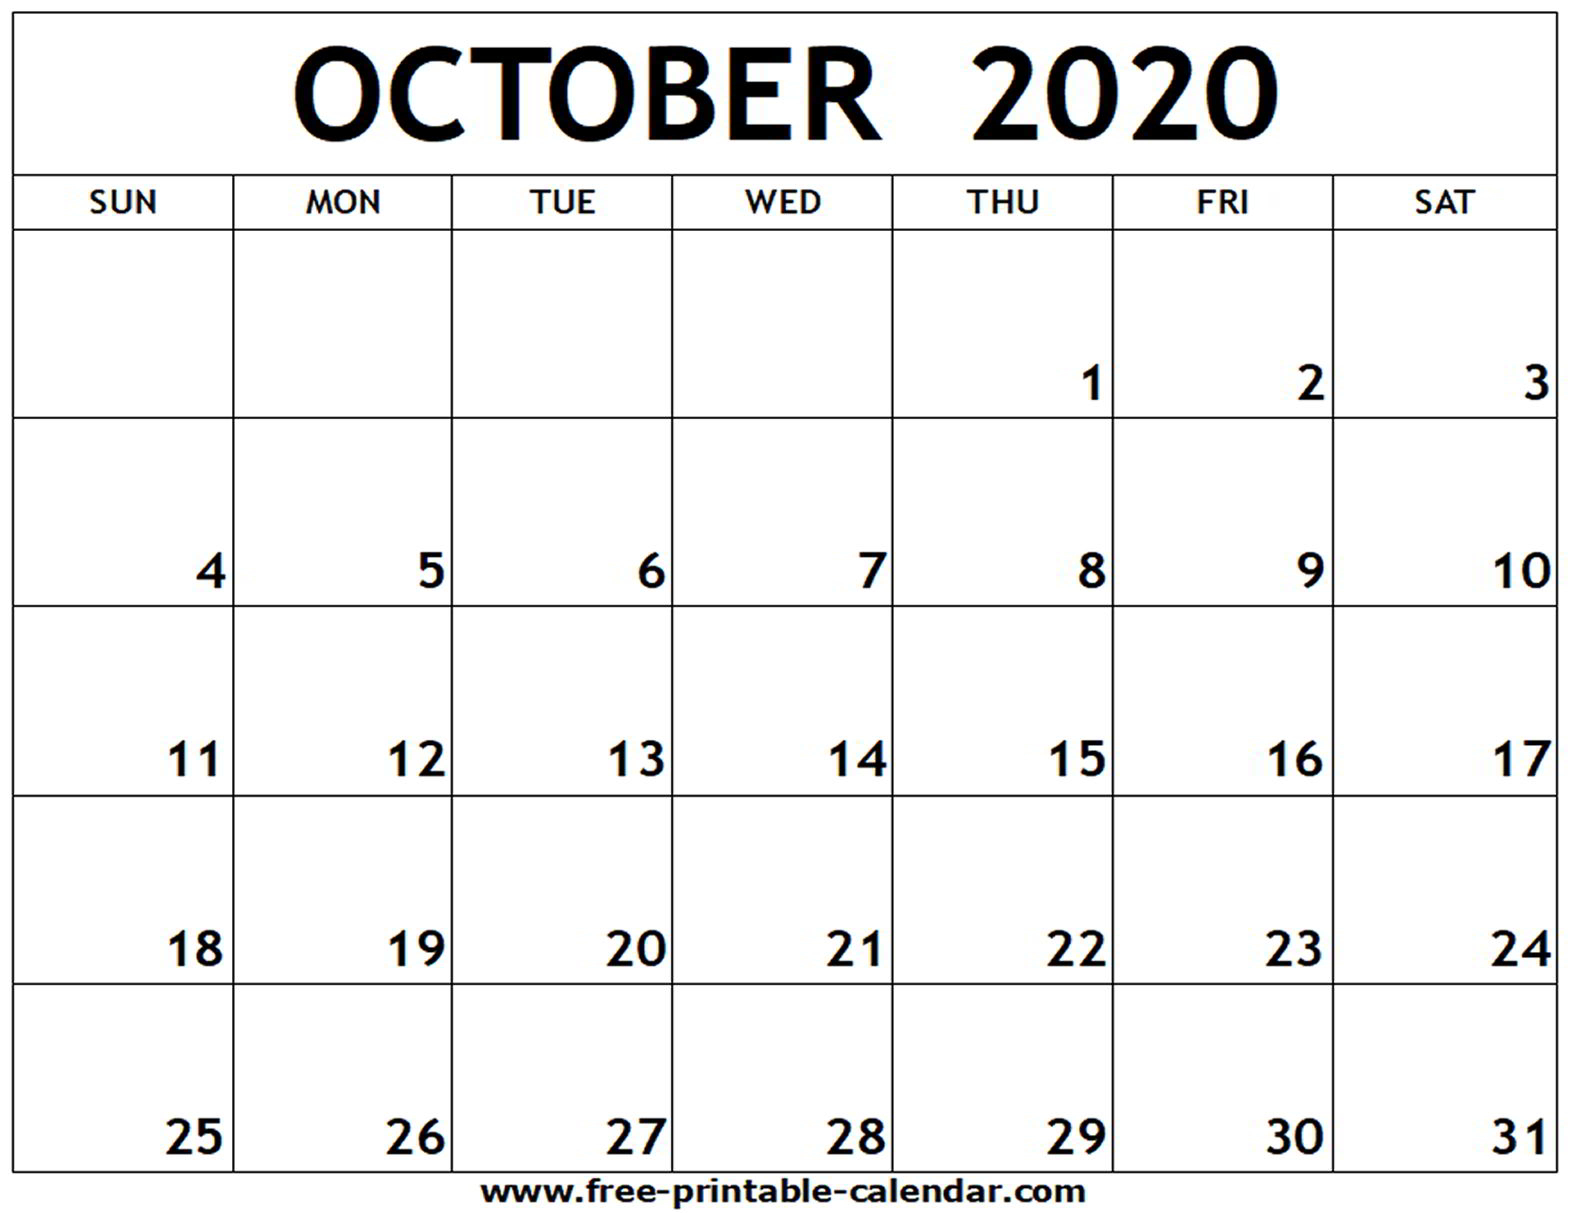 October 2020 Printable Calendar Pdf - Zohre.horizonconsulting.co